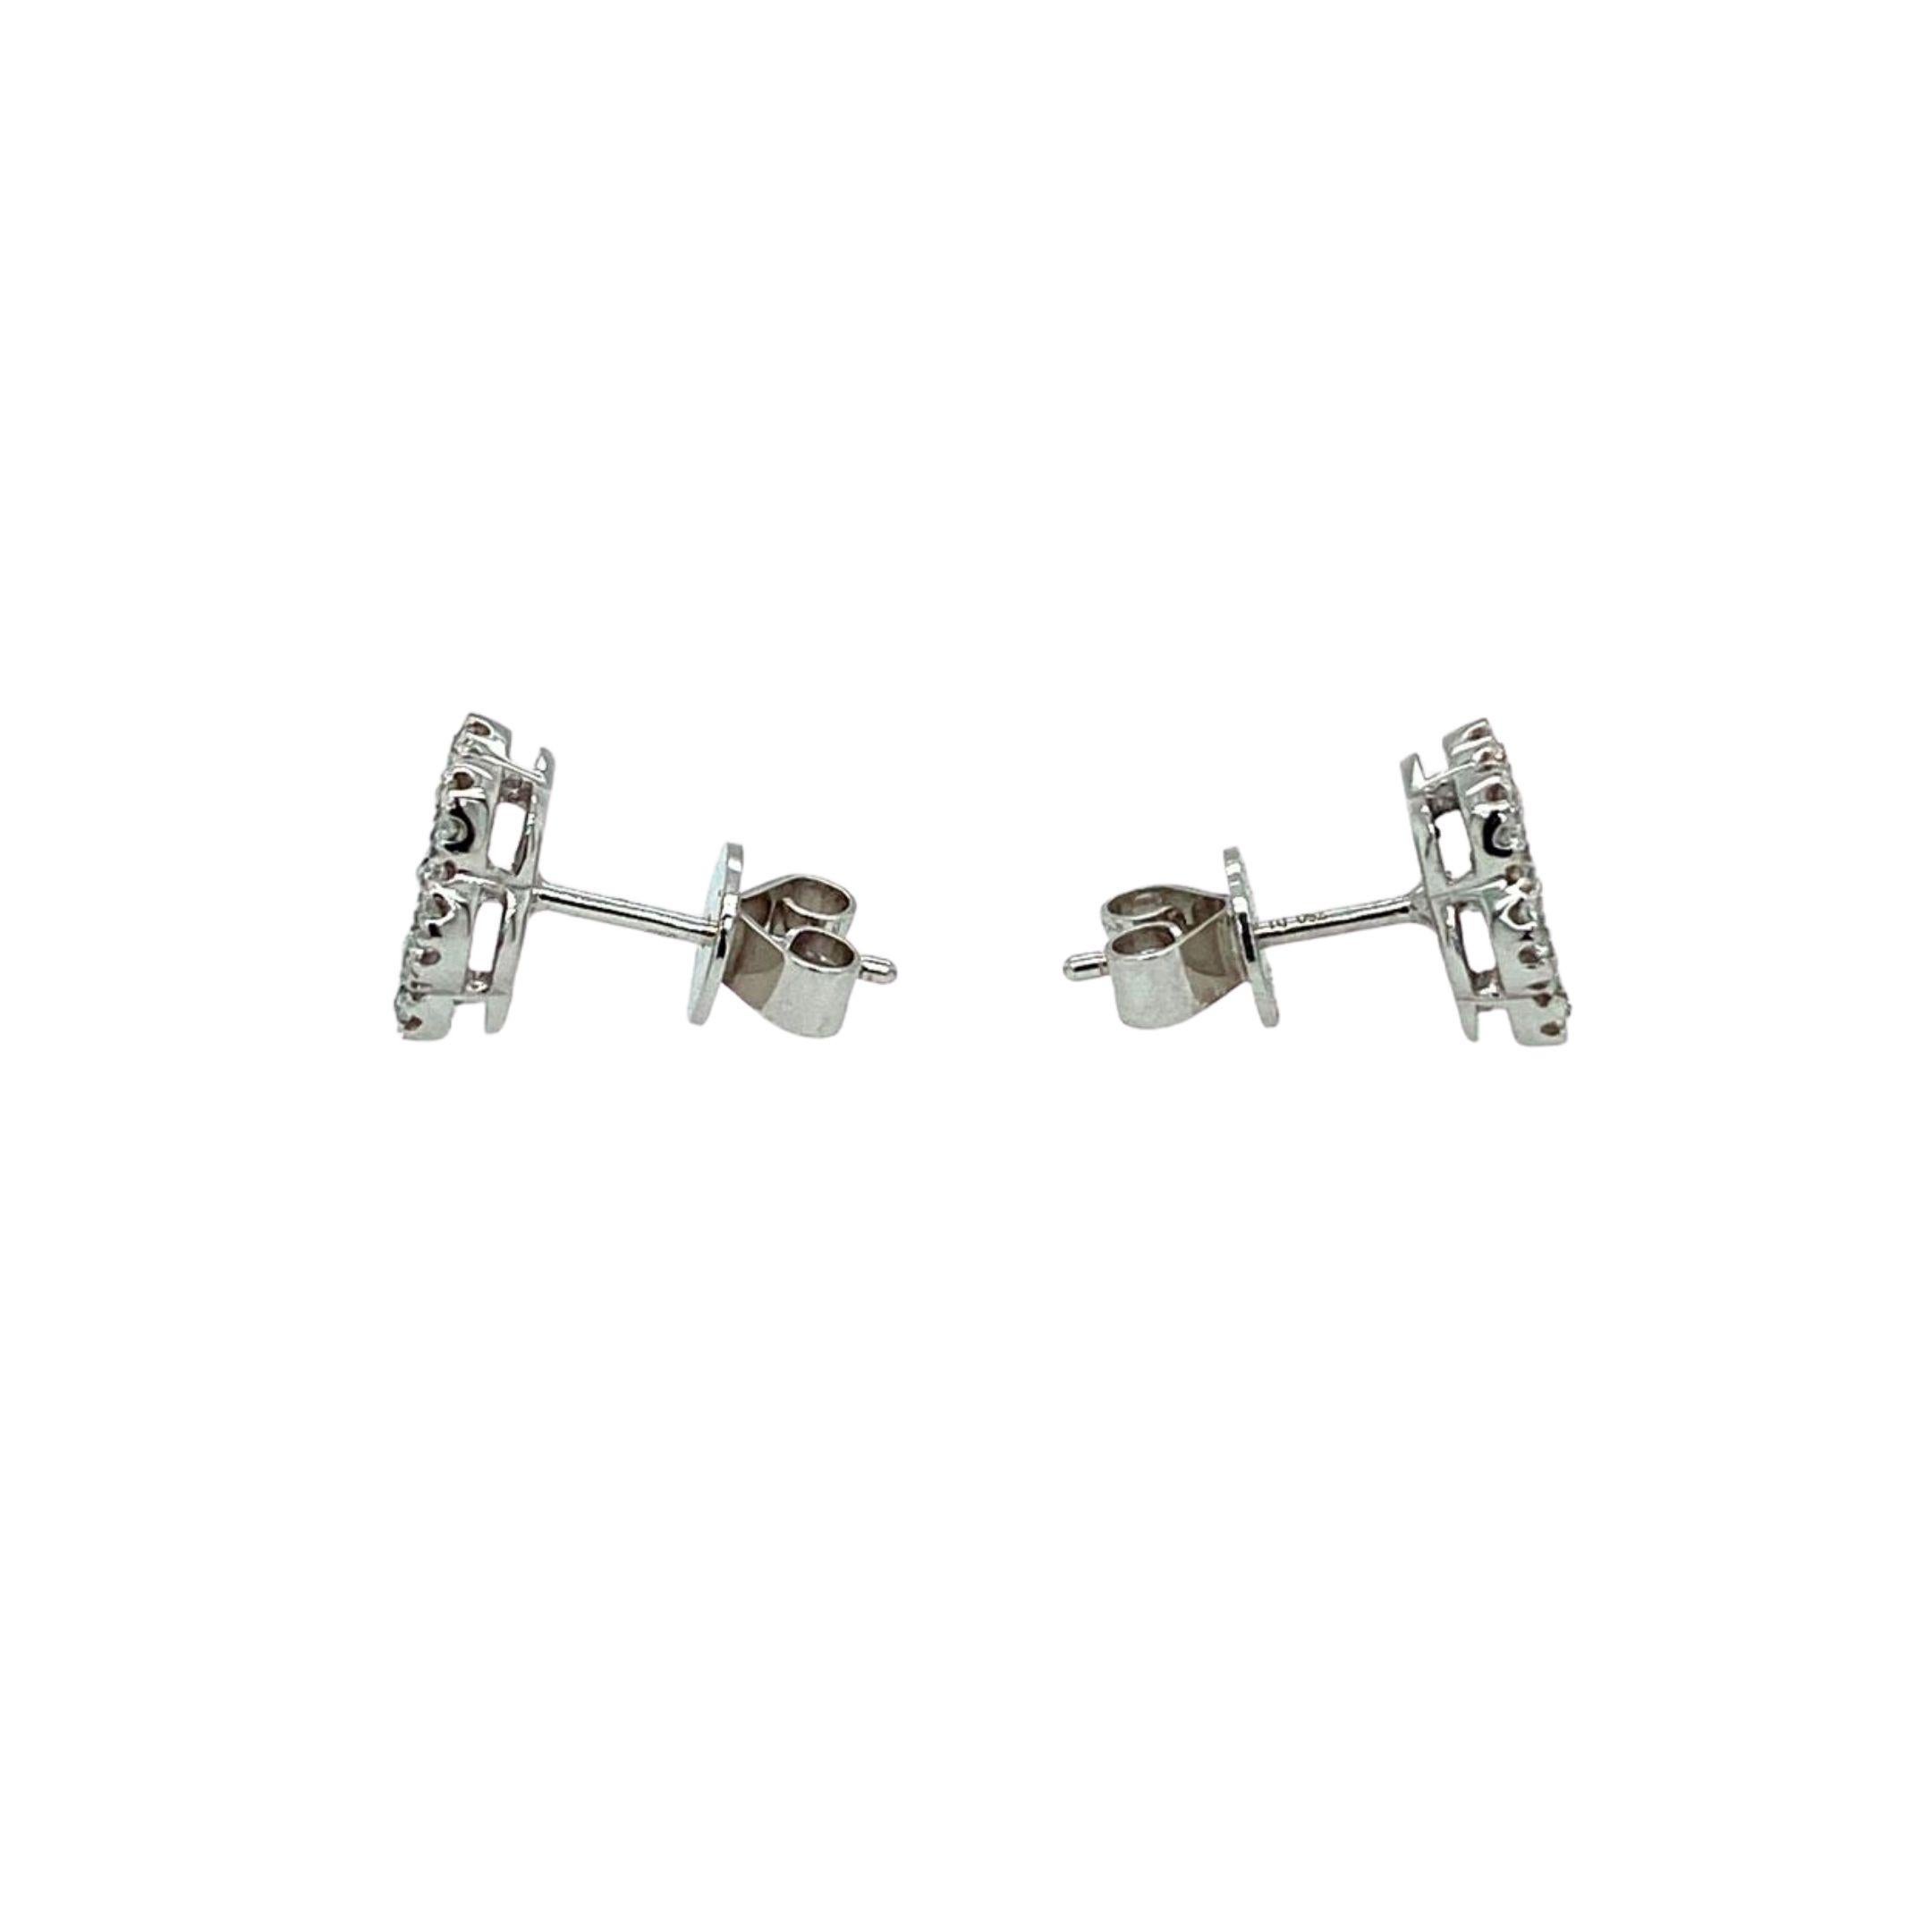 Diamond Flower Stud Earrings made with real/natural brilliant cut diamonds. Total Weight: 1.04 carats, Diamond Quantity: 62 (round diamonds). Set on 18 karat white gold, push back setting.